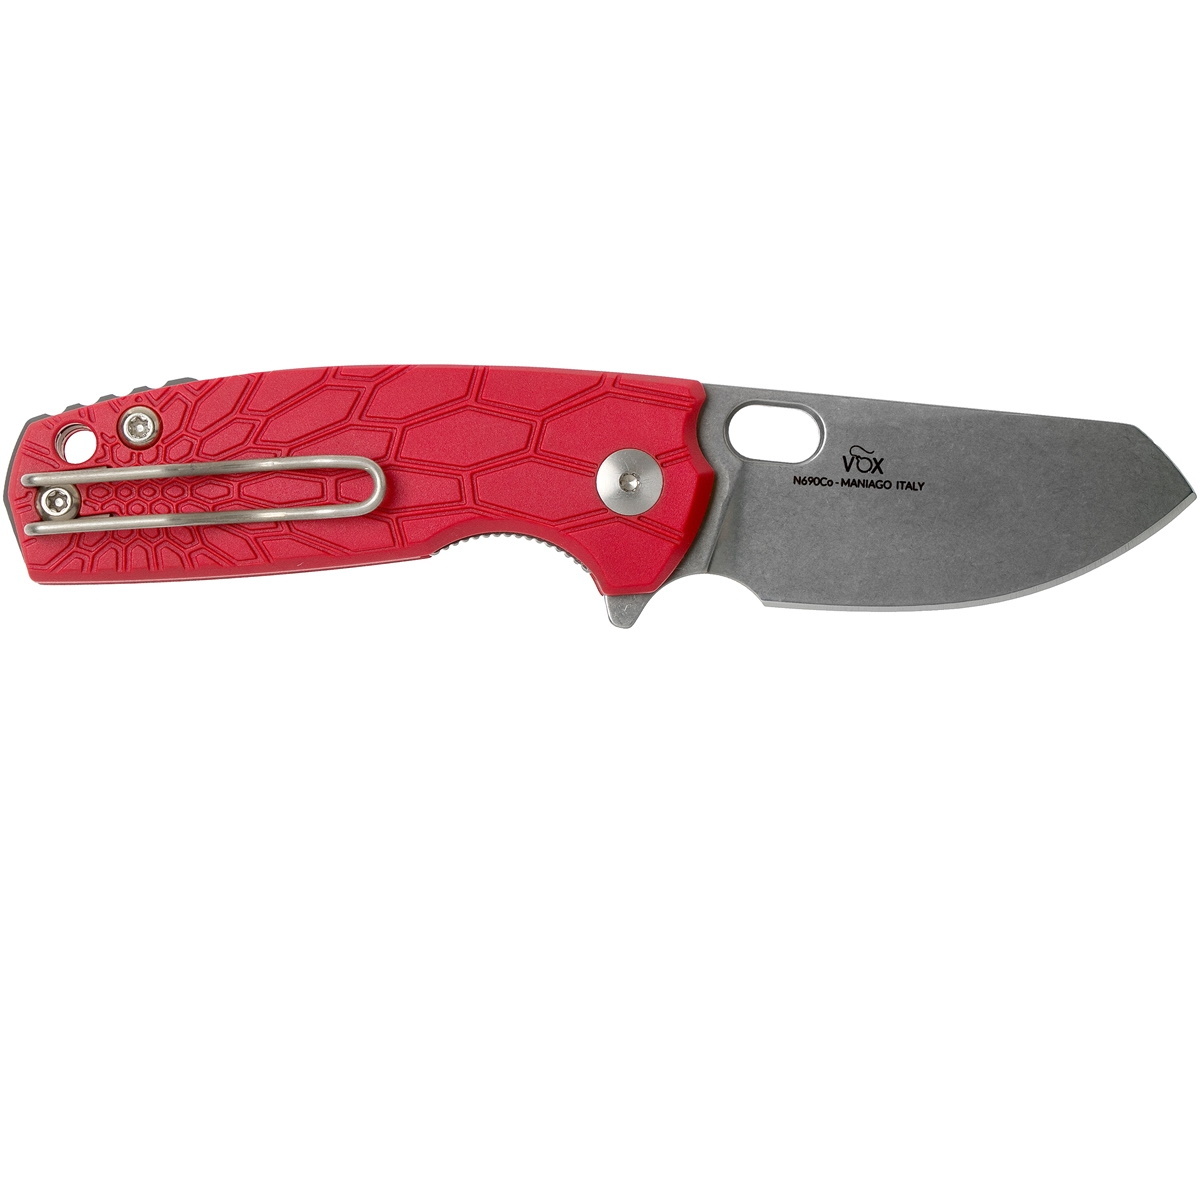 Складной нож Fox Baby Core, сталь N690, рукоять пластик FRN красный - фото 3